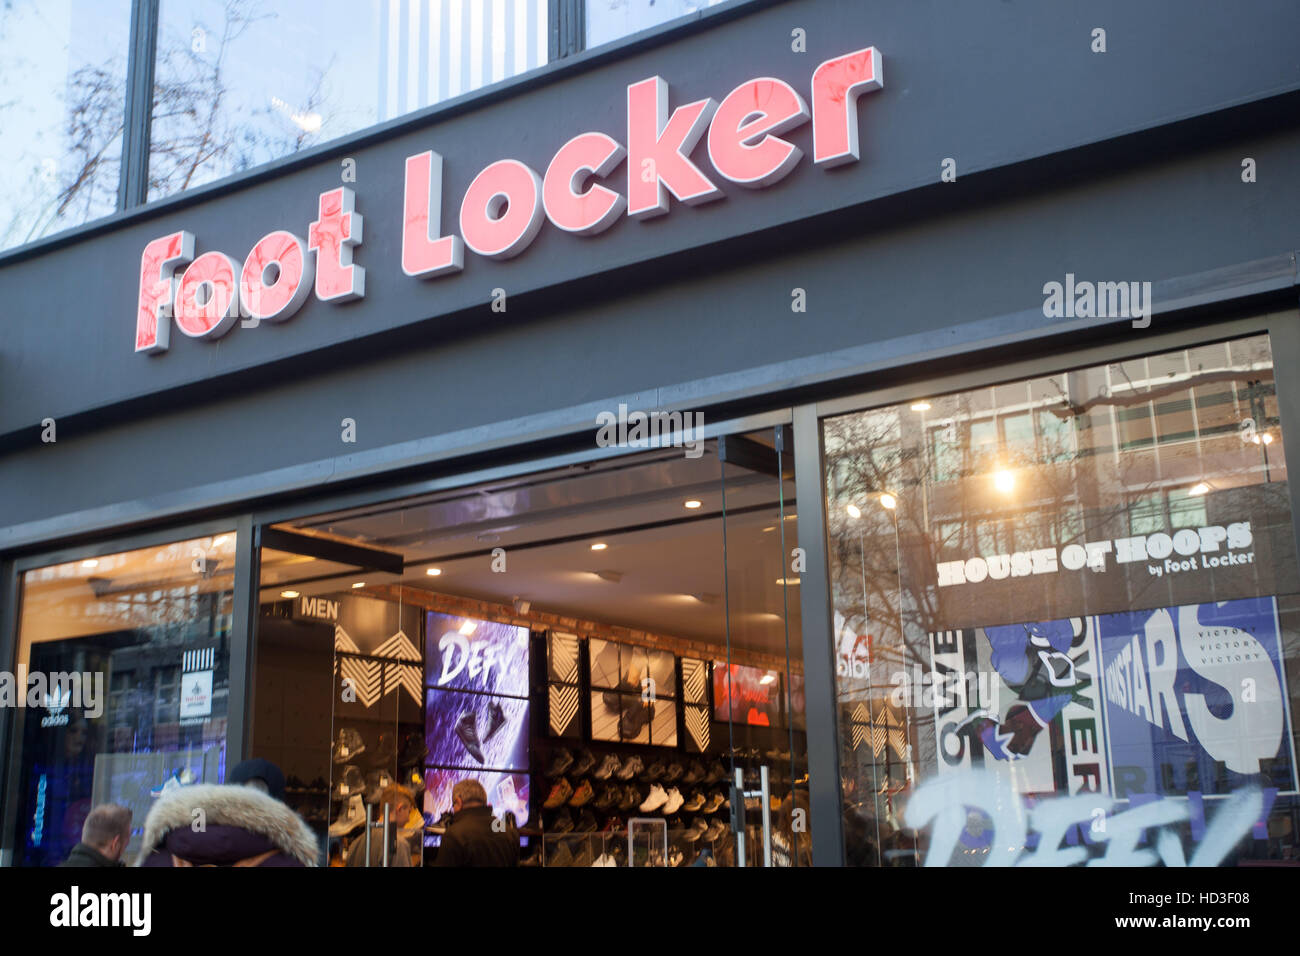 Negozio Foot Locker in Tauentzienstrasse. Berlino, Germania Foto Stock